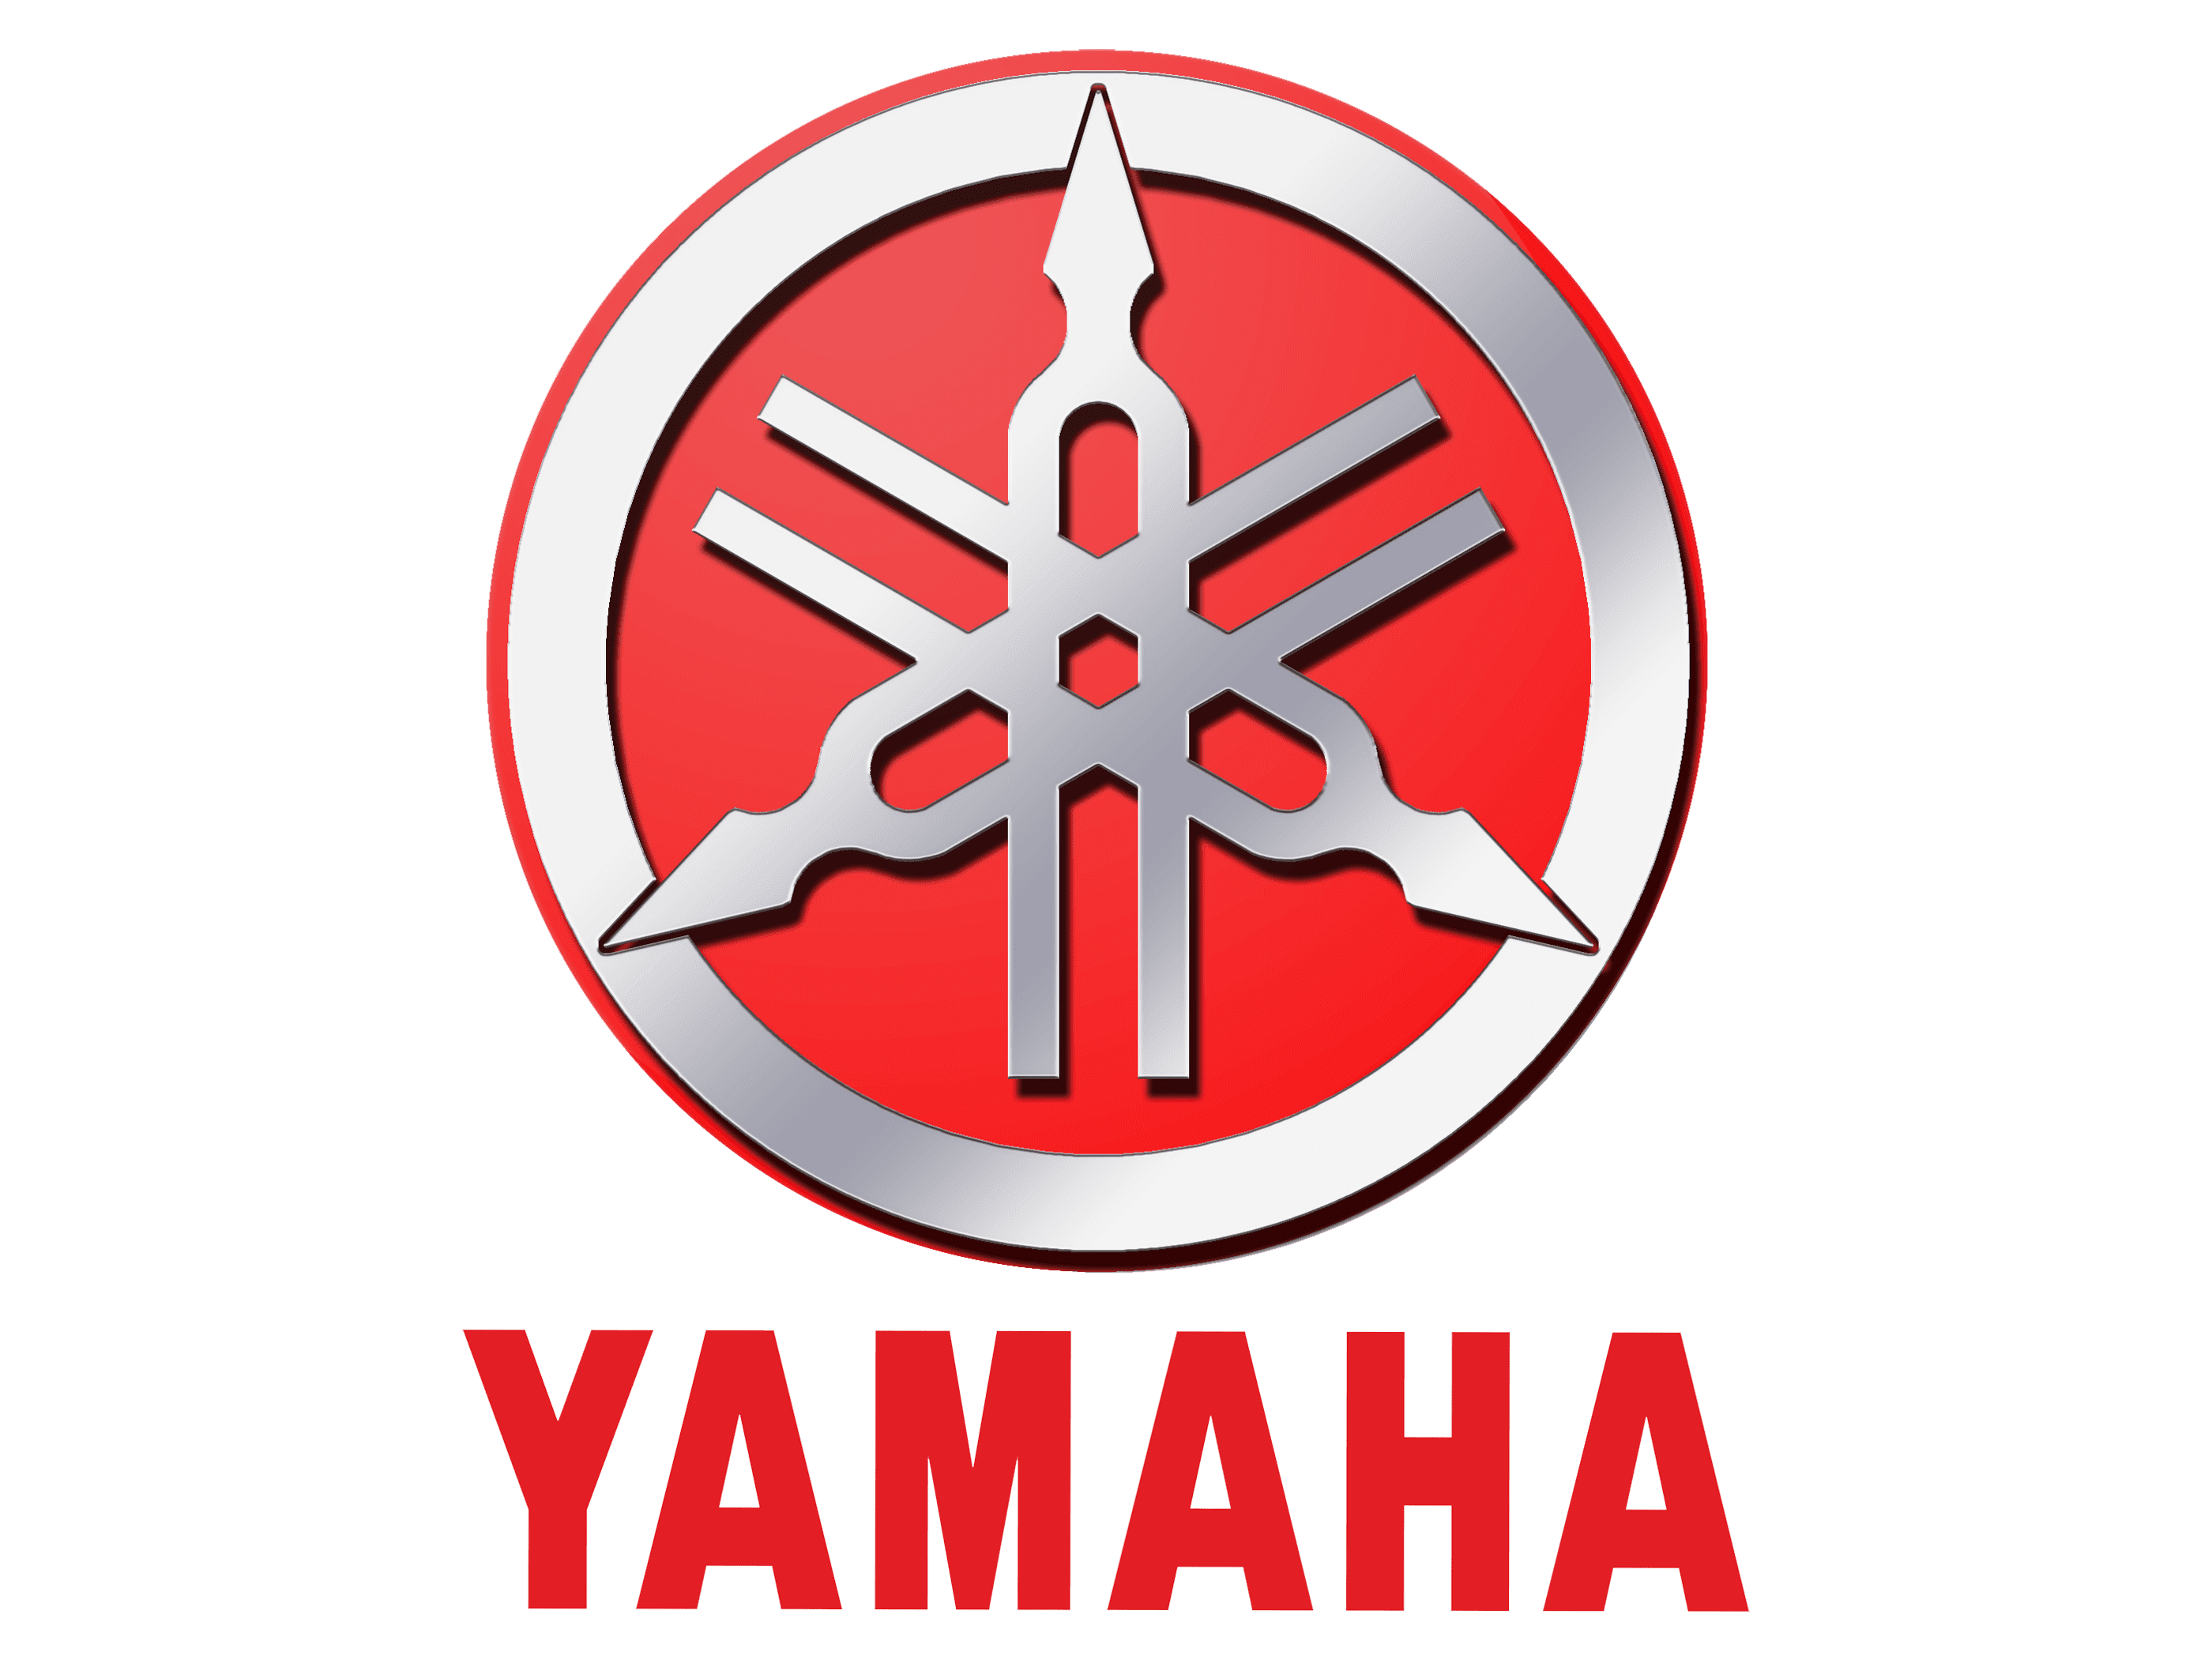 Yamaha logos - MXG.ONE - Best moto decals